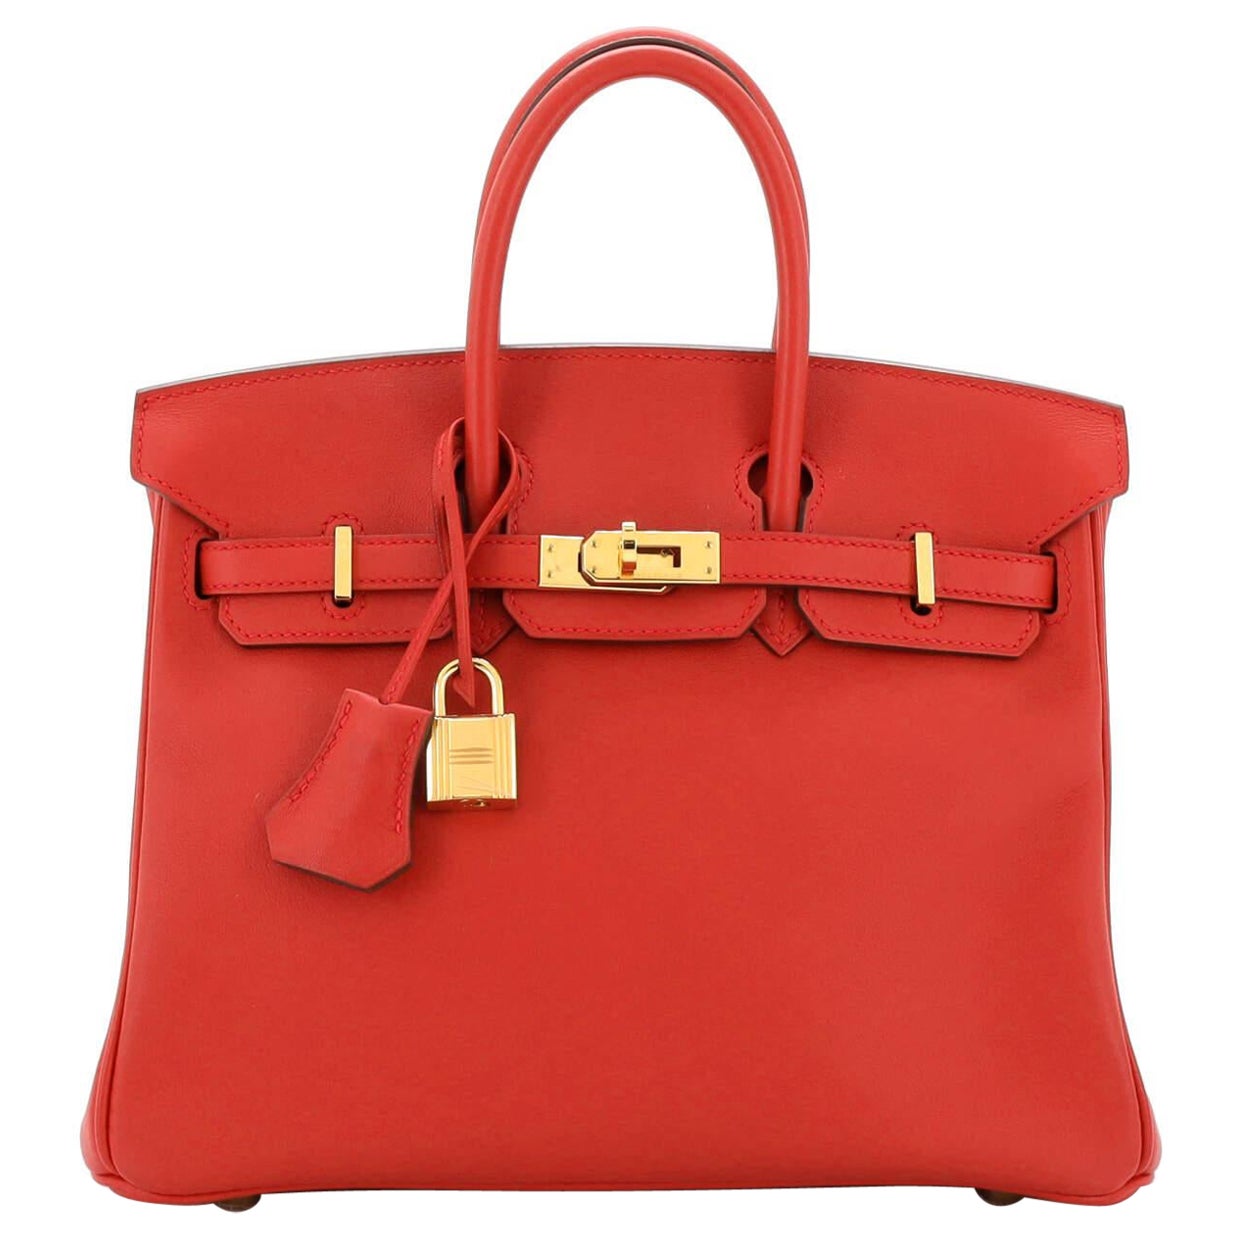 Hermes Birkin Handbag Rouge Casaque Swift with Gold Hardware 25